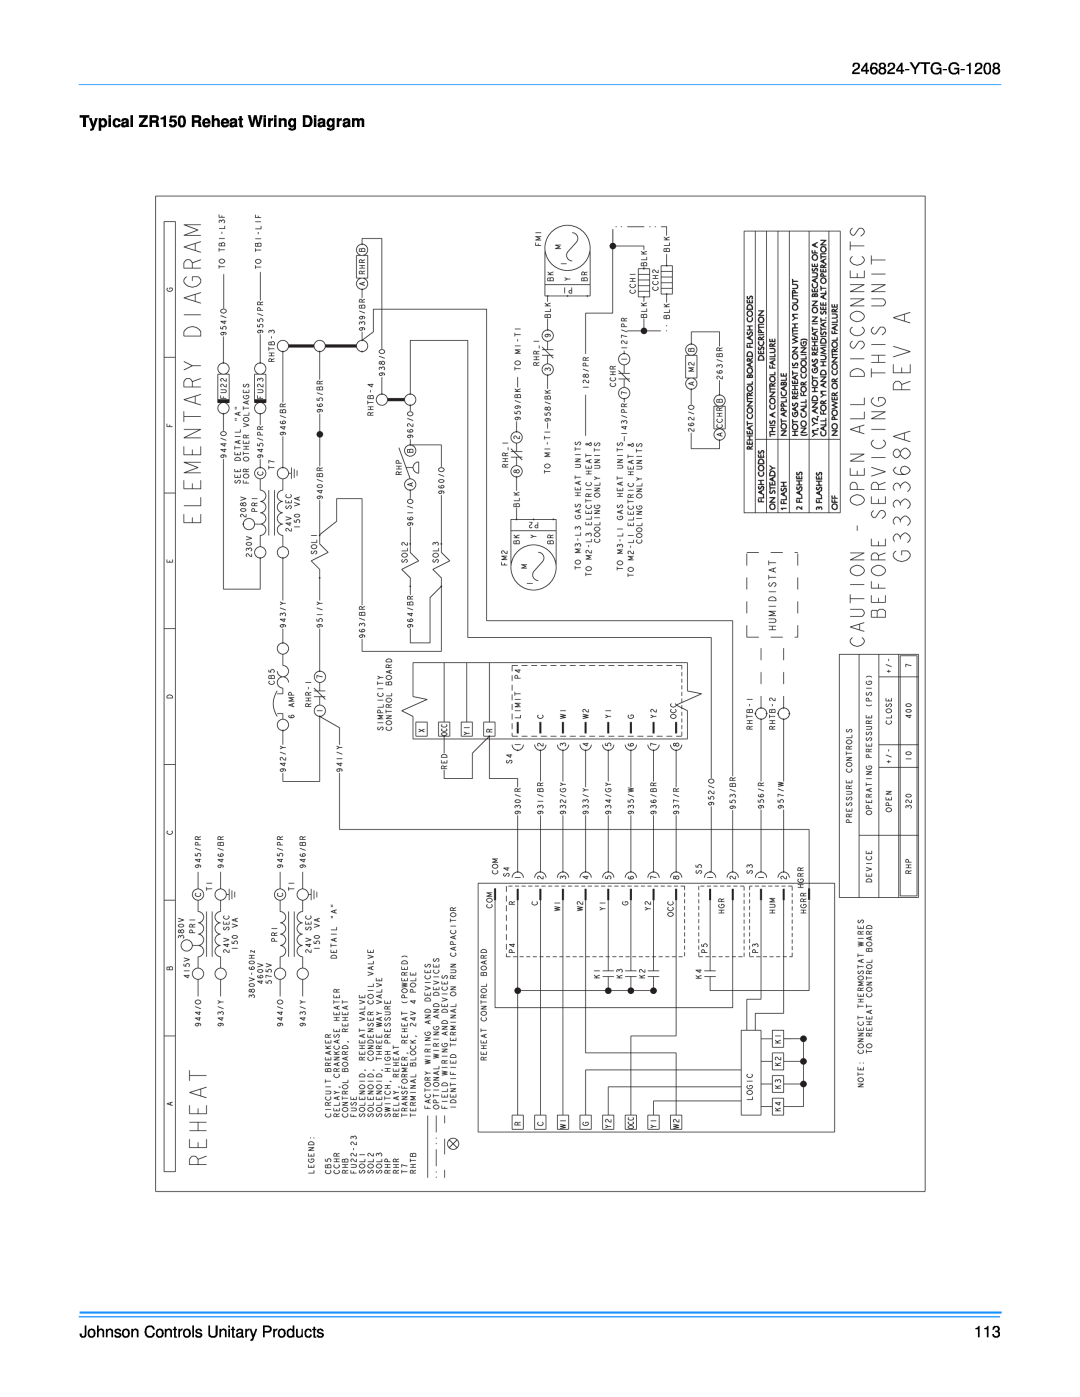 York R-410A manual YTG-G-1208, Typical ZR150 Reheat Wiring Diagram, Johnson Controls Unitary Products 